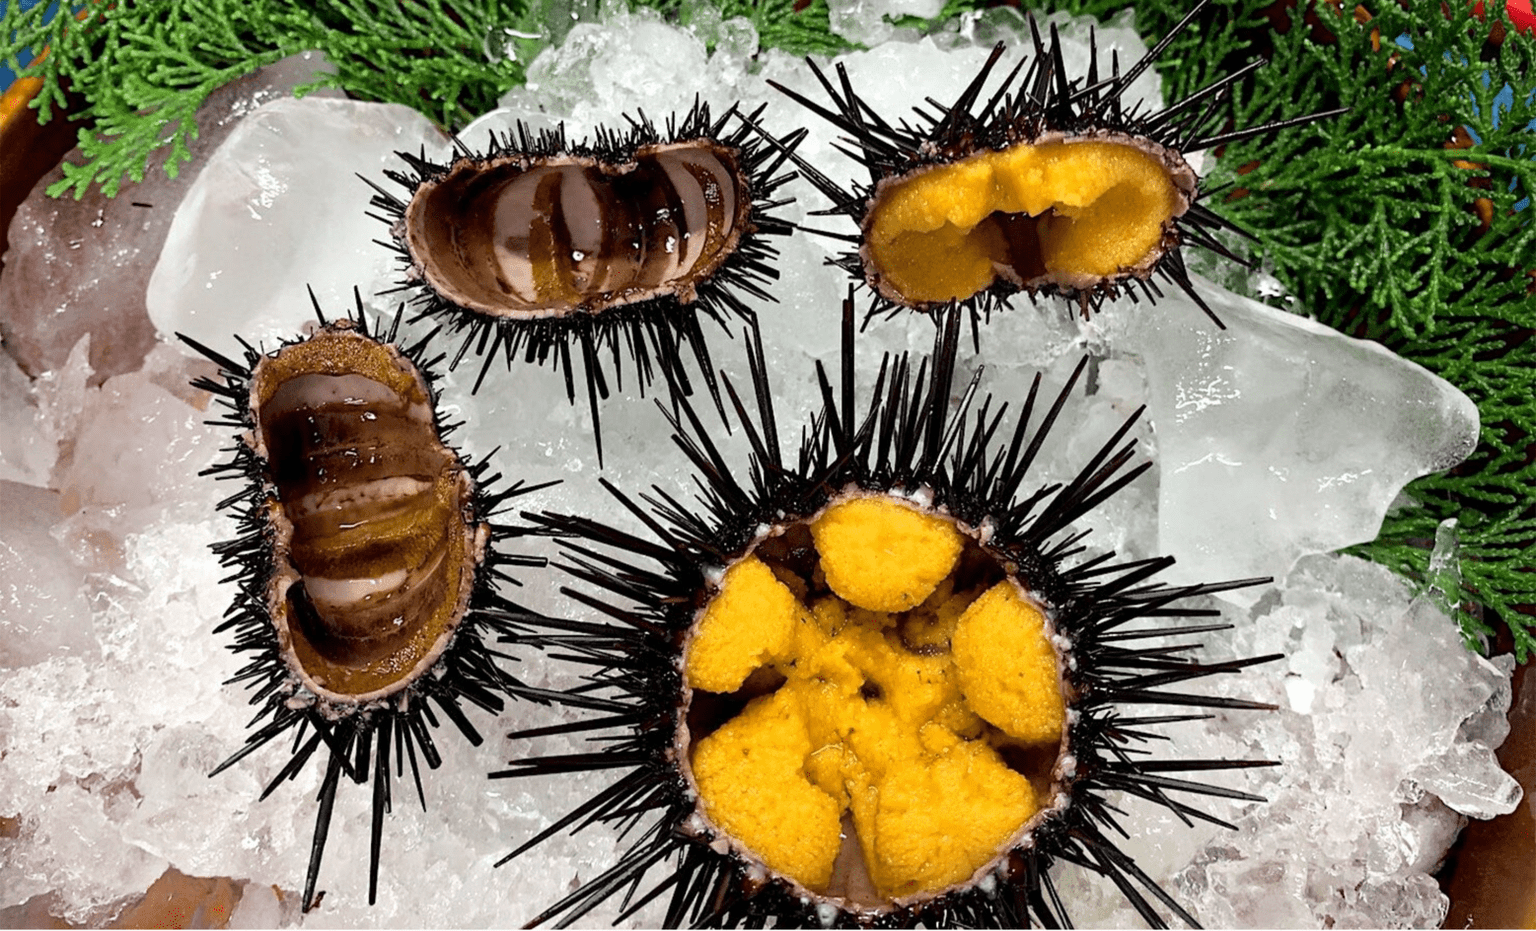 “Zombie” sea urchins to luxury food